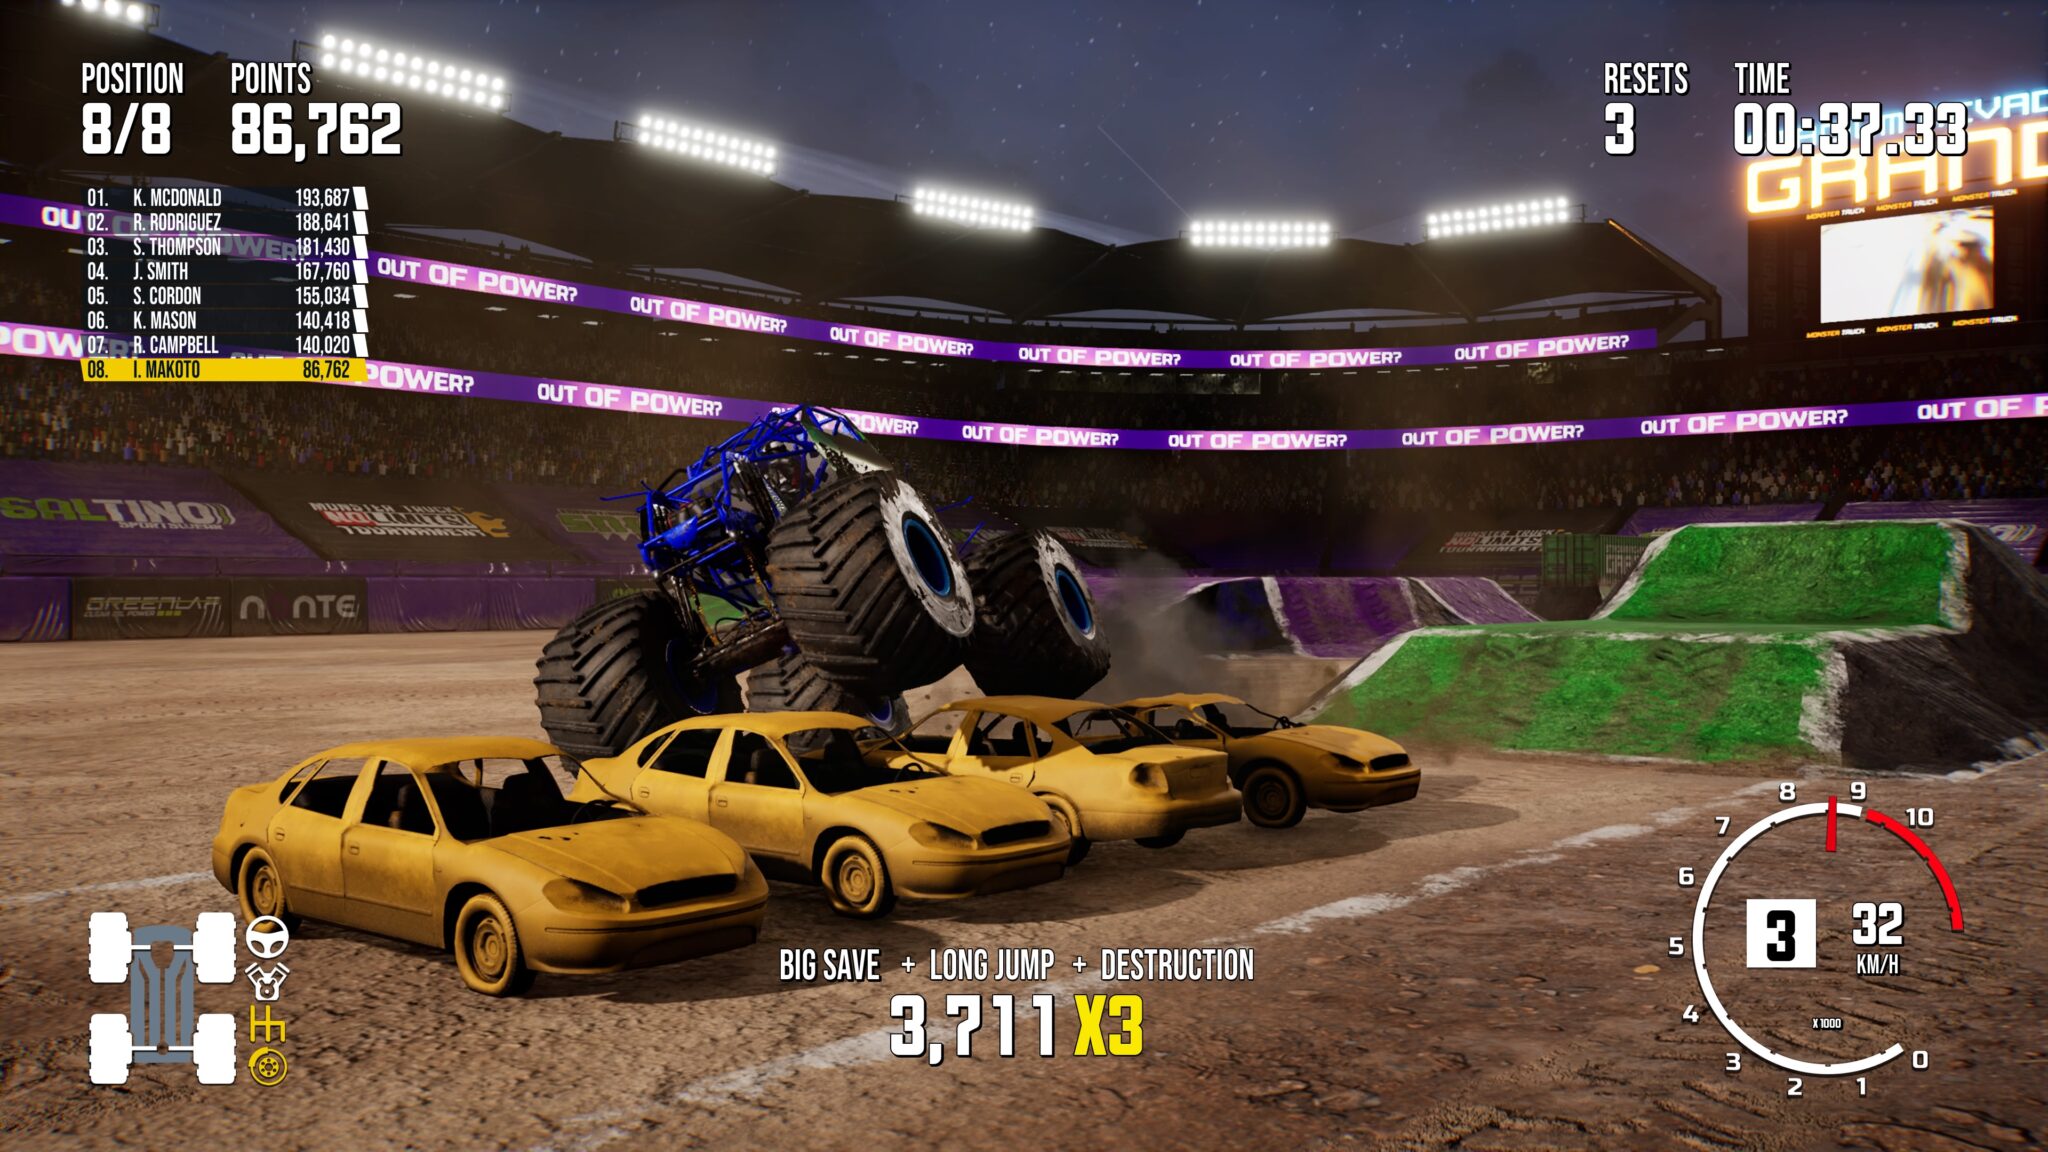 monster truck championship ps5 upgrade